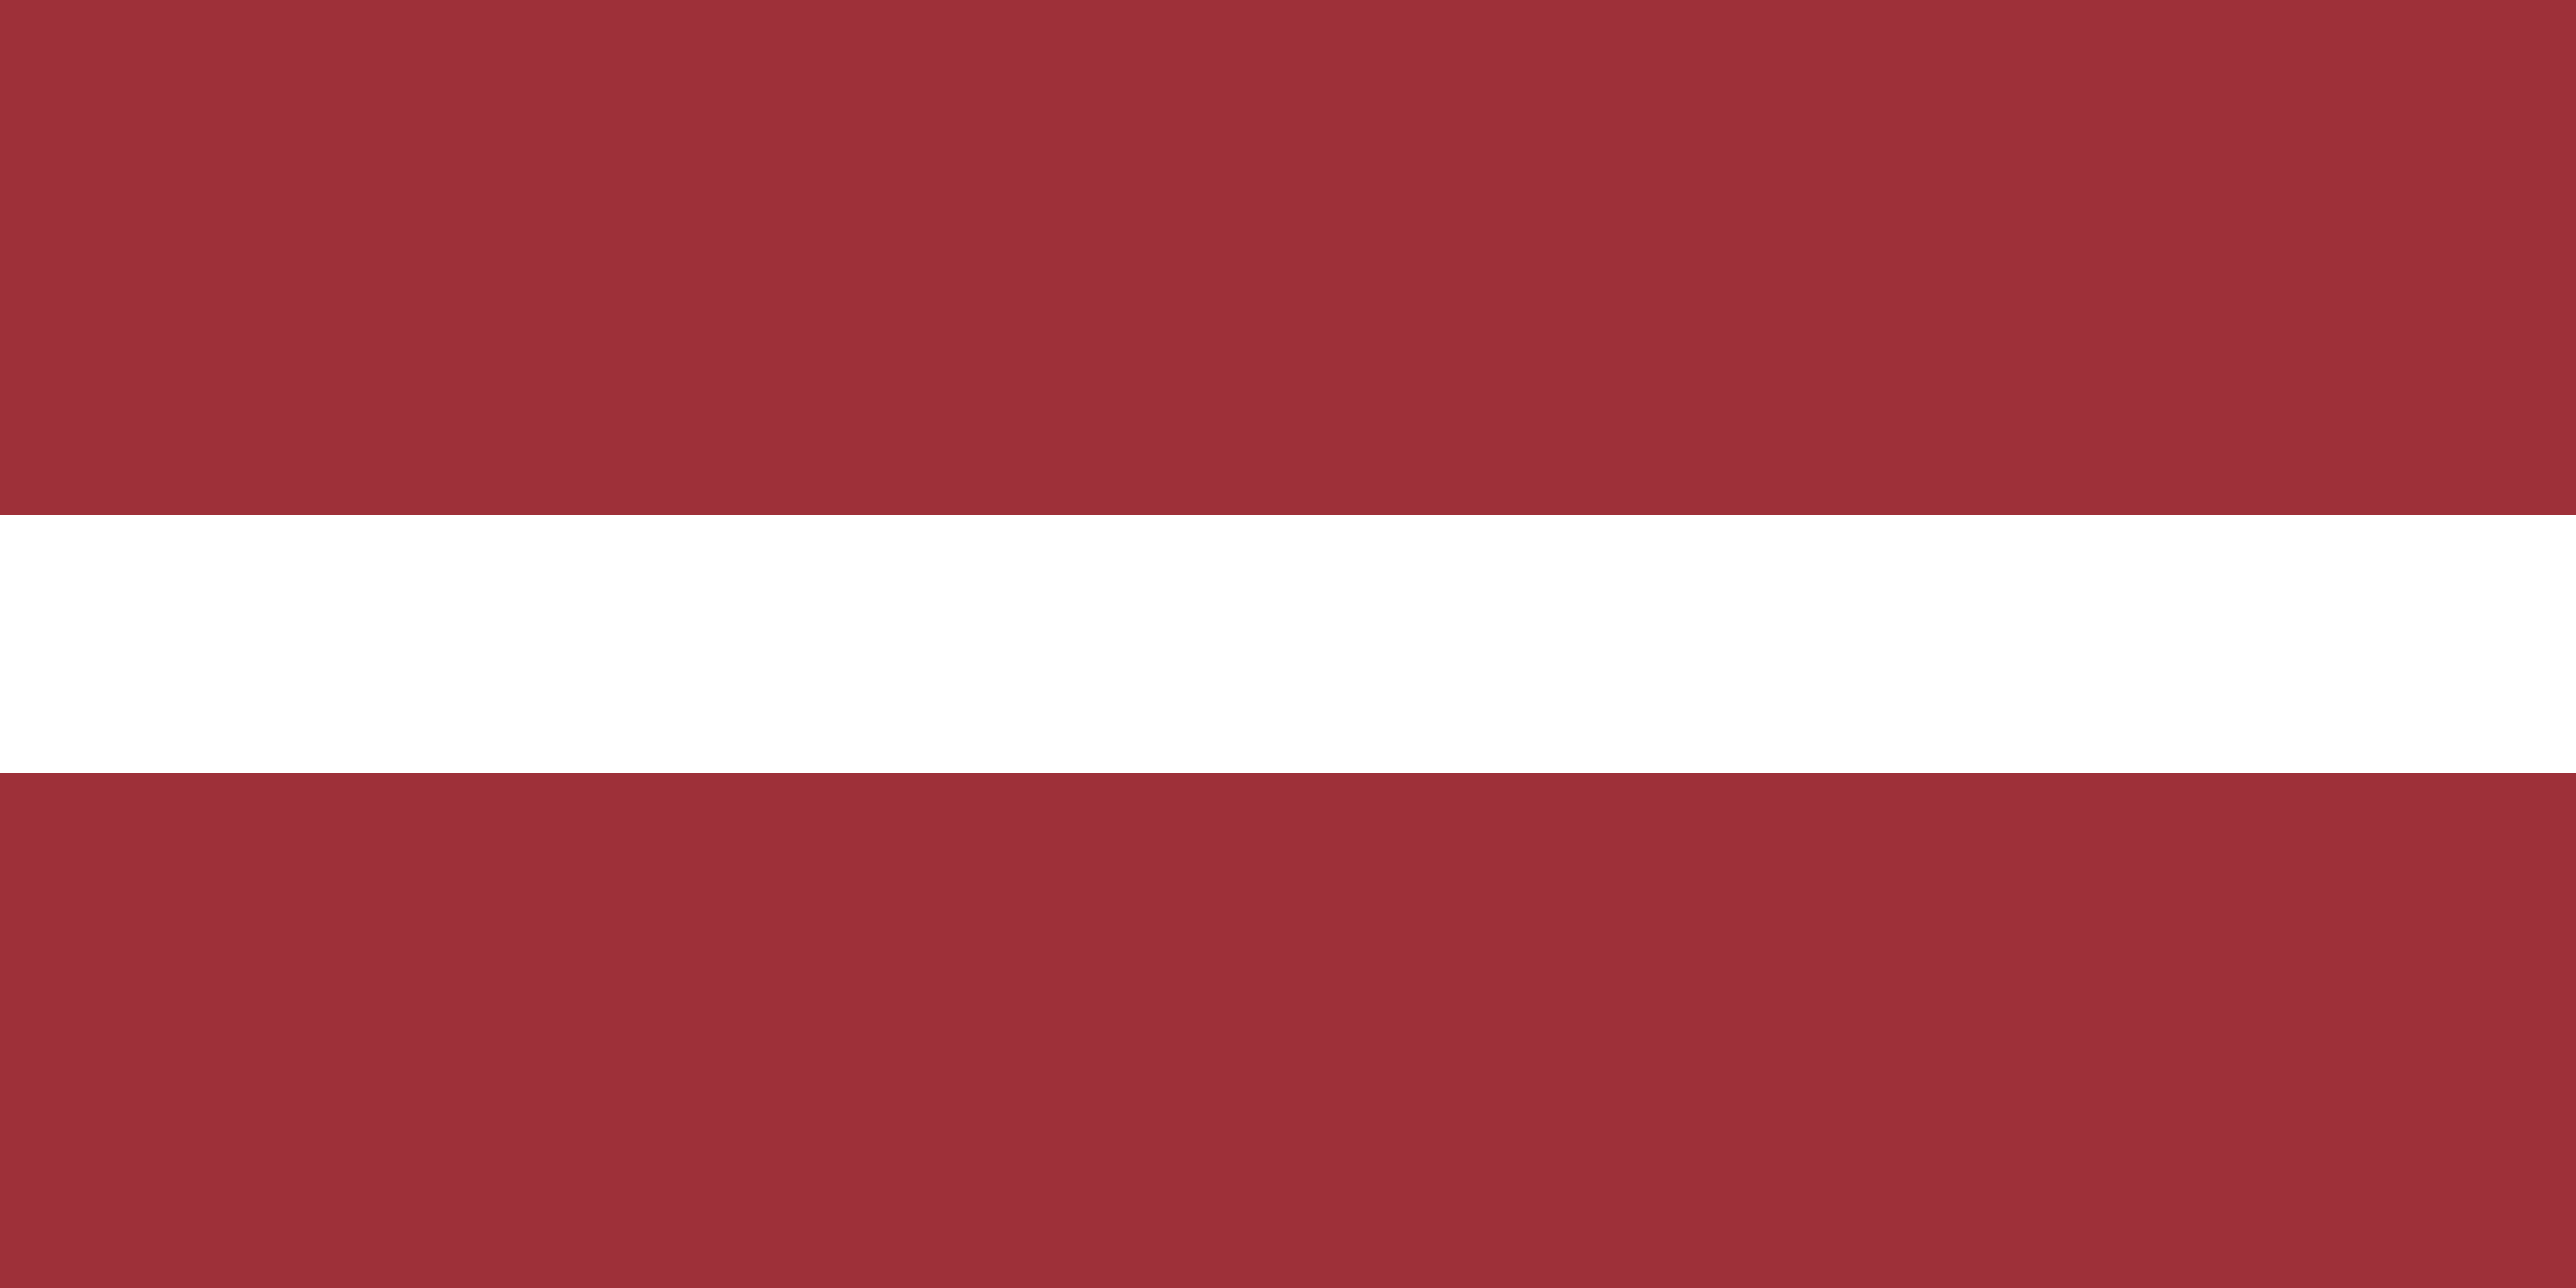 Free Latvia Flag Documents: PDF, DOC, DOCX, HTML & More!